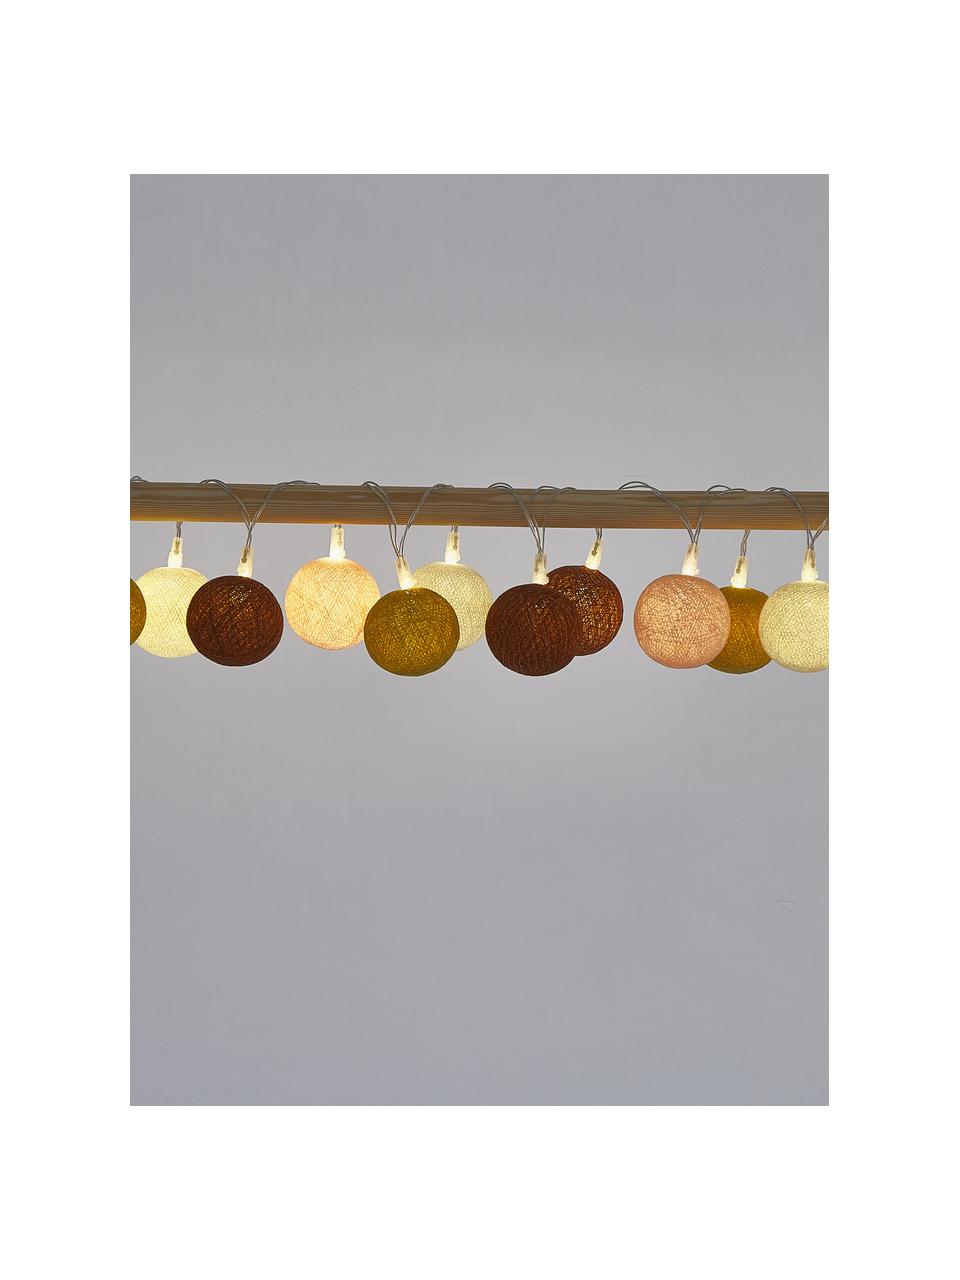 LED lichtslinger Colorain, 378 cm, Lampions: polyester, WFTO gecertifi, Roodbruin, mosterdgeel, lichtroze, wit, L 378 cm